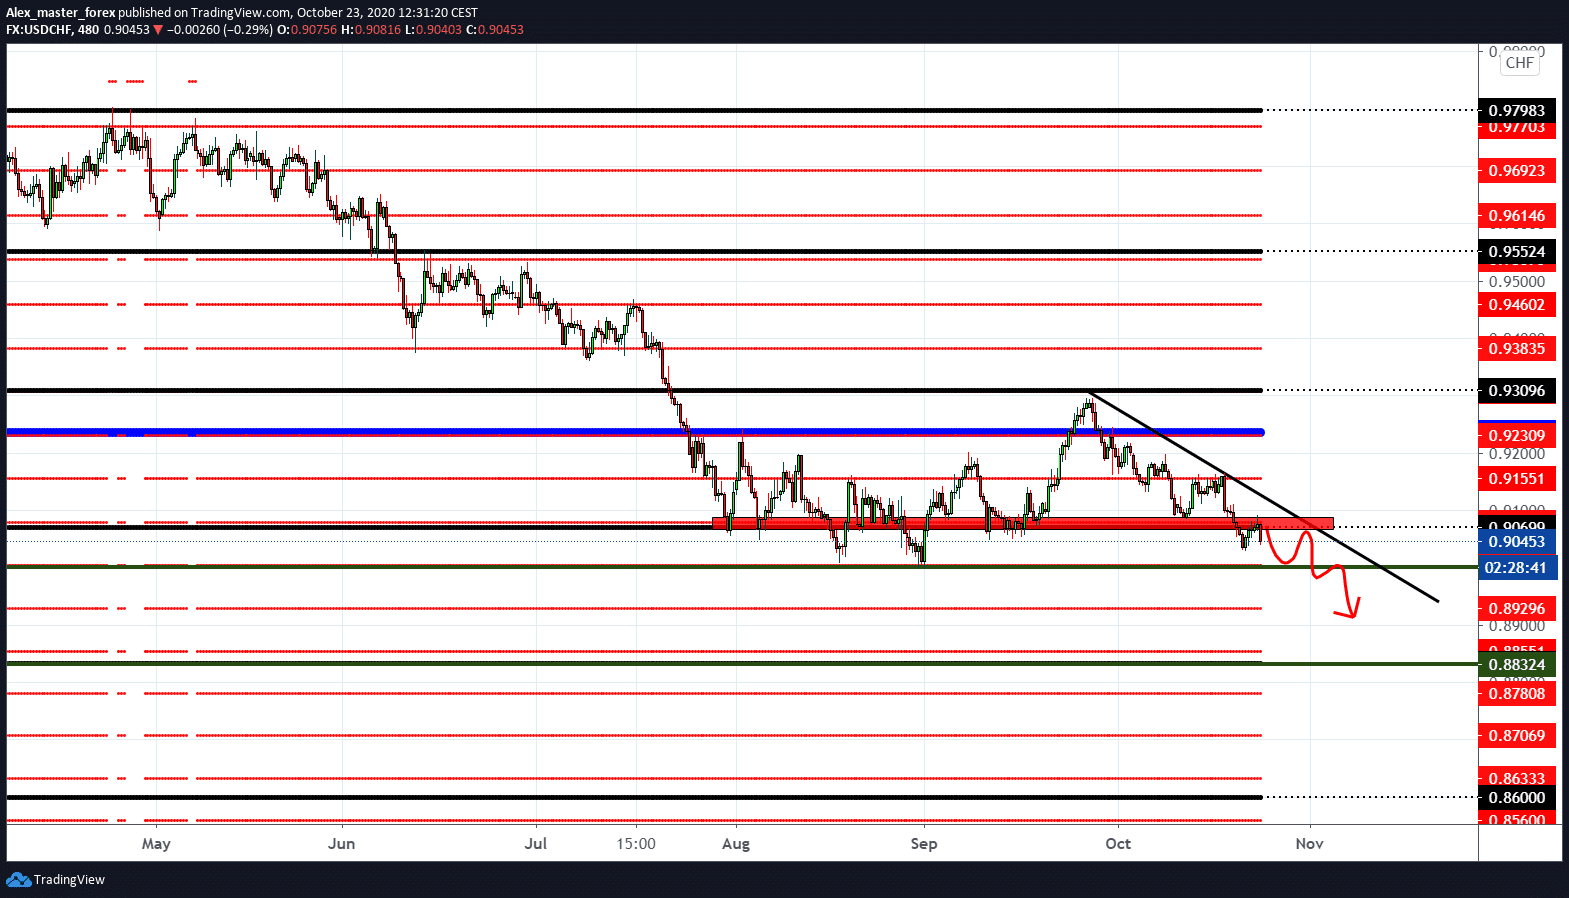 USD / CHF continued according to the bearish scenario